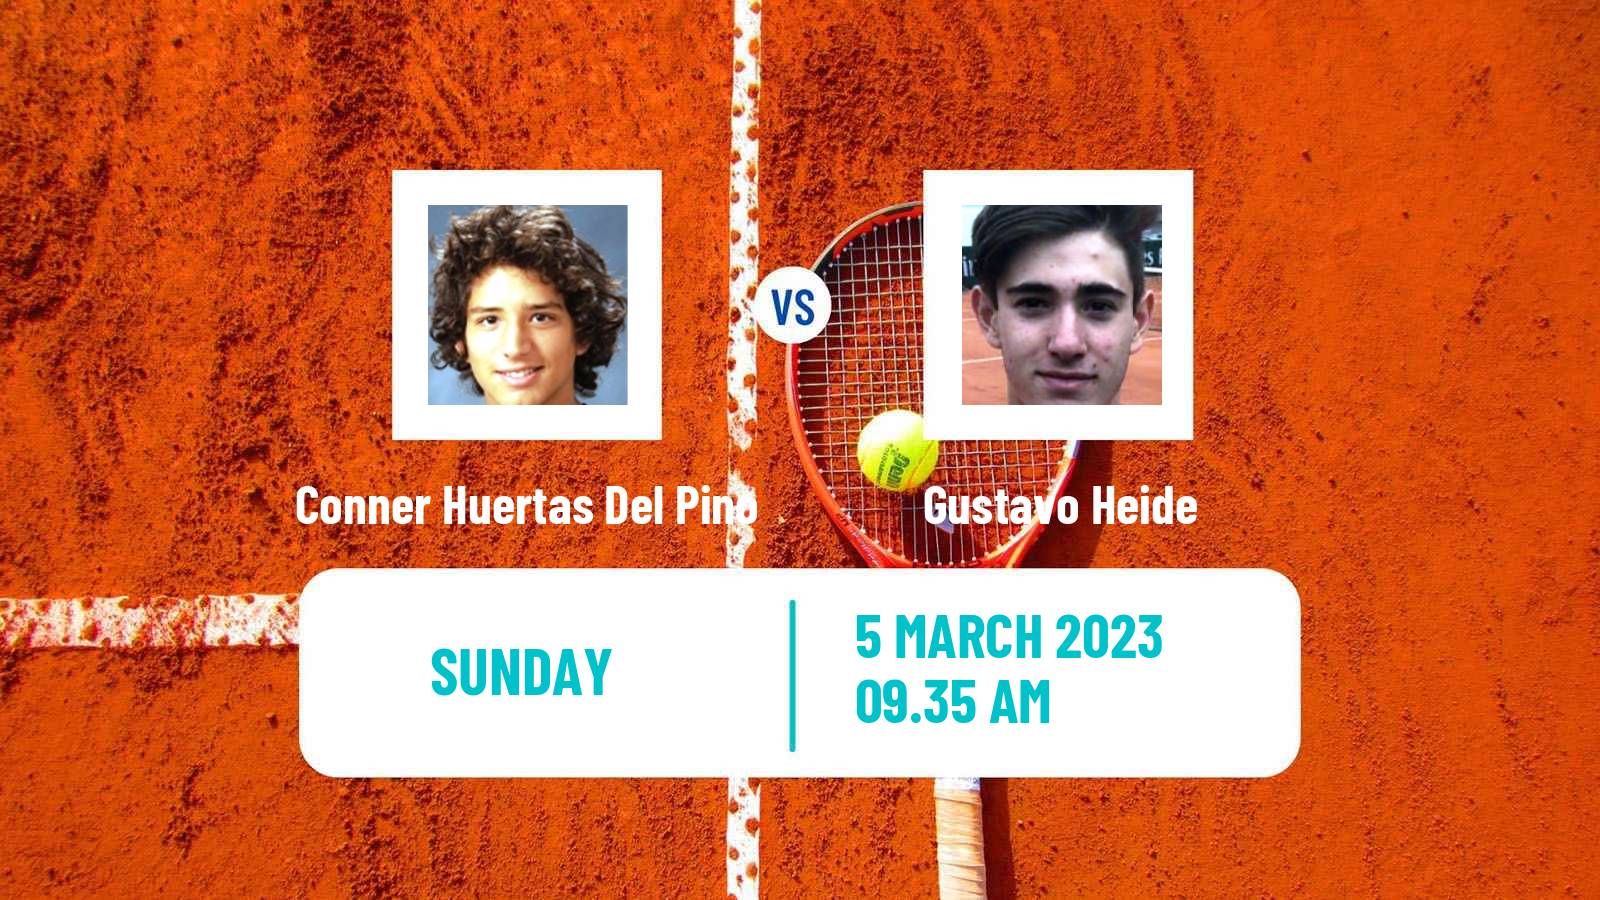 Tennis ATP Challenger Conner Huertas Del Pino - Gustavo Heide